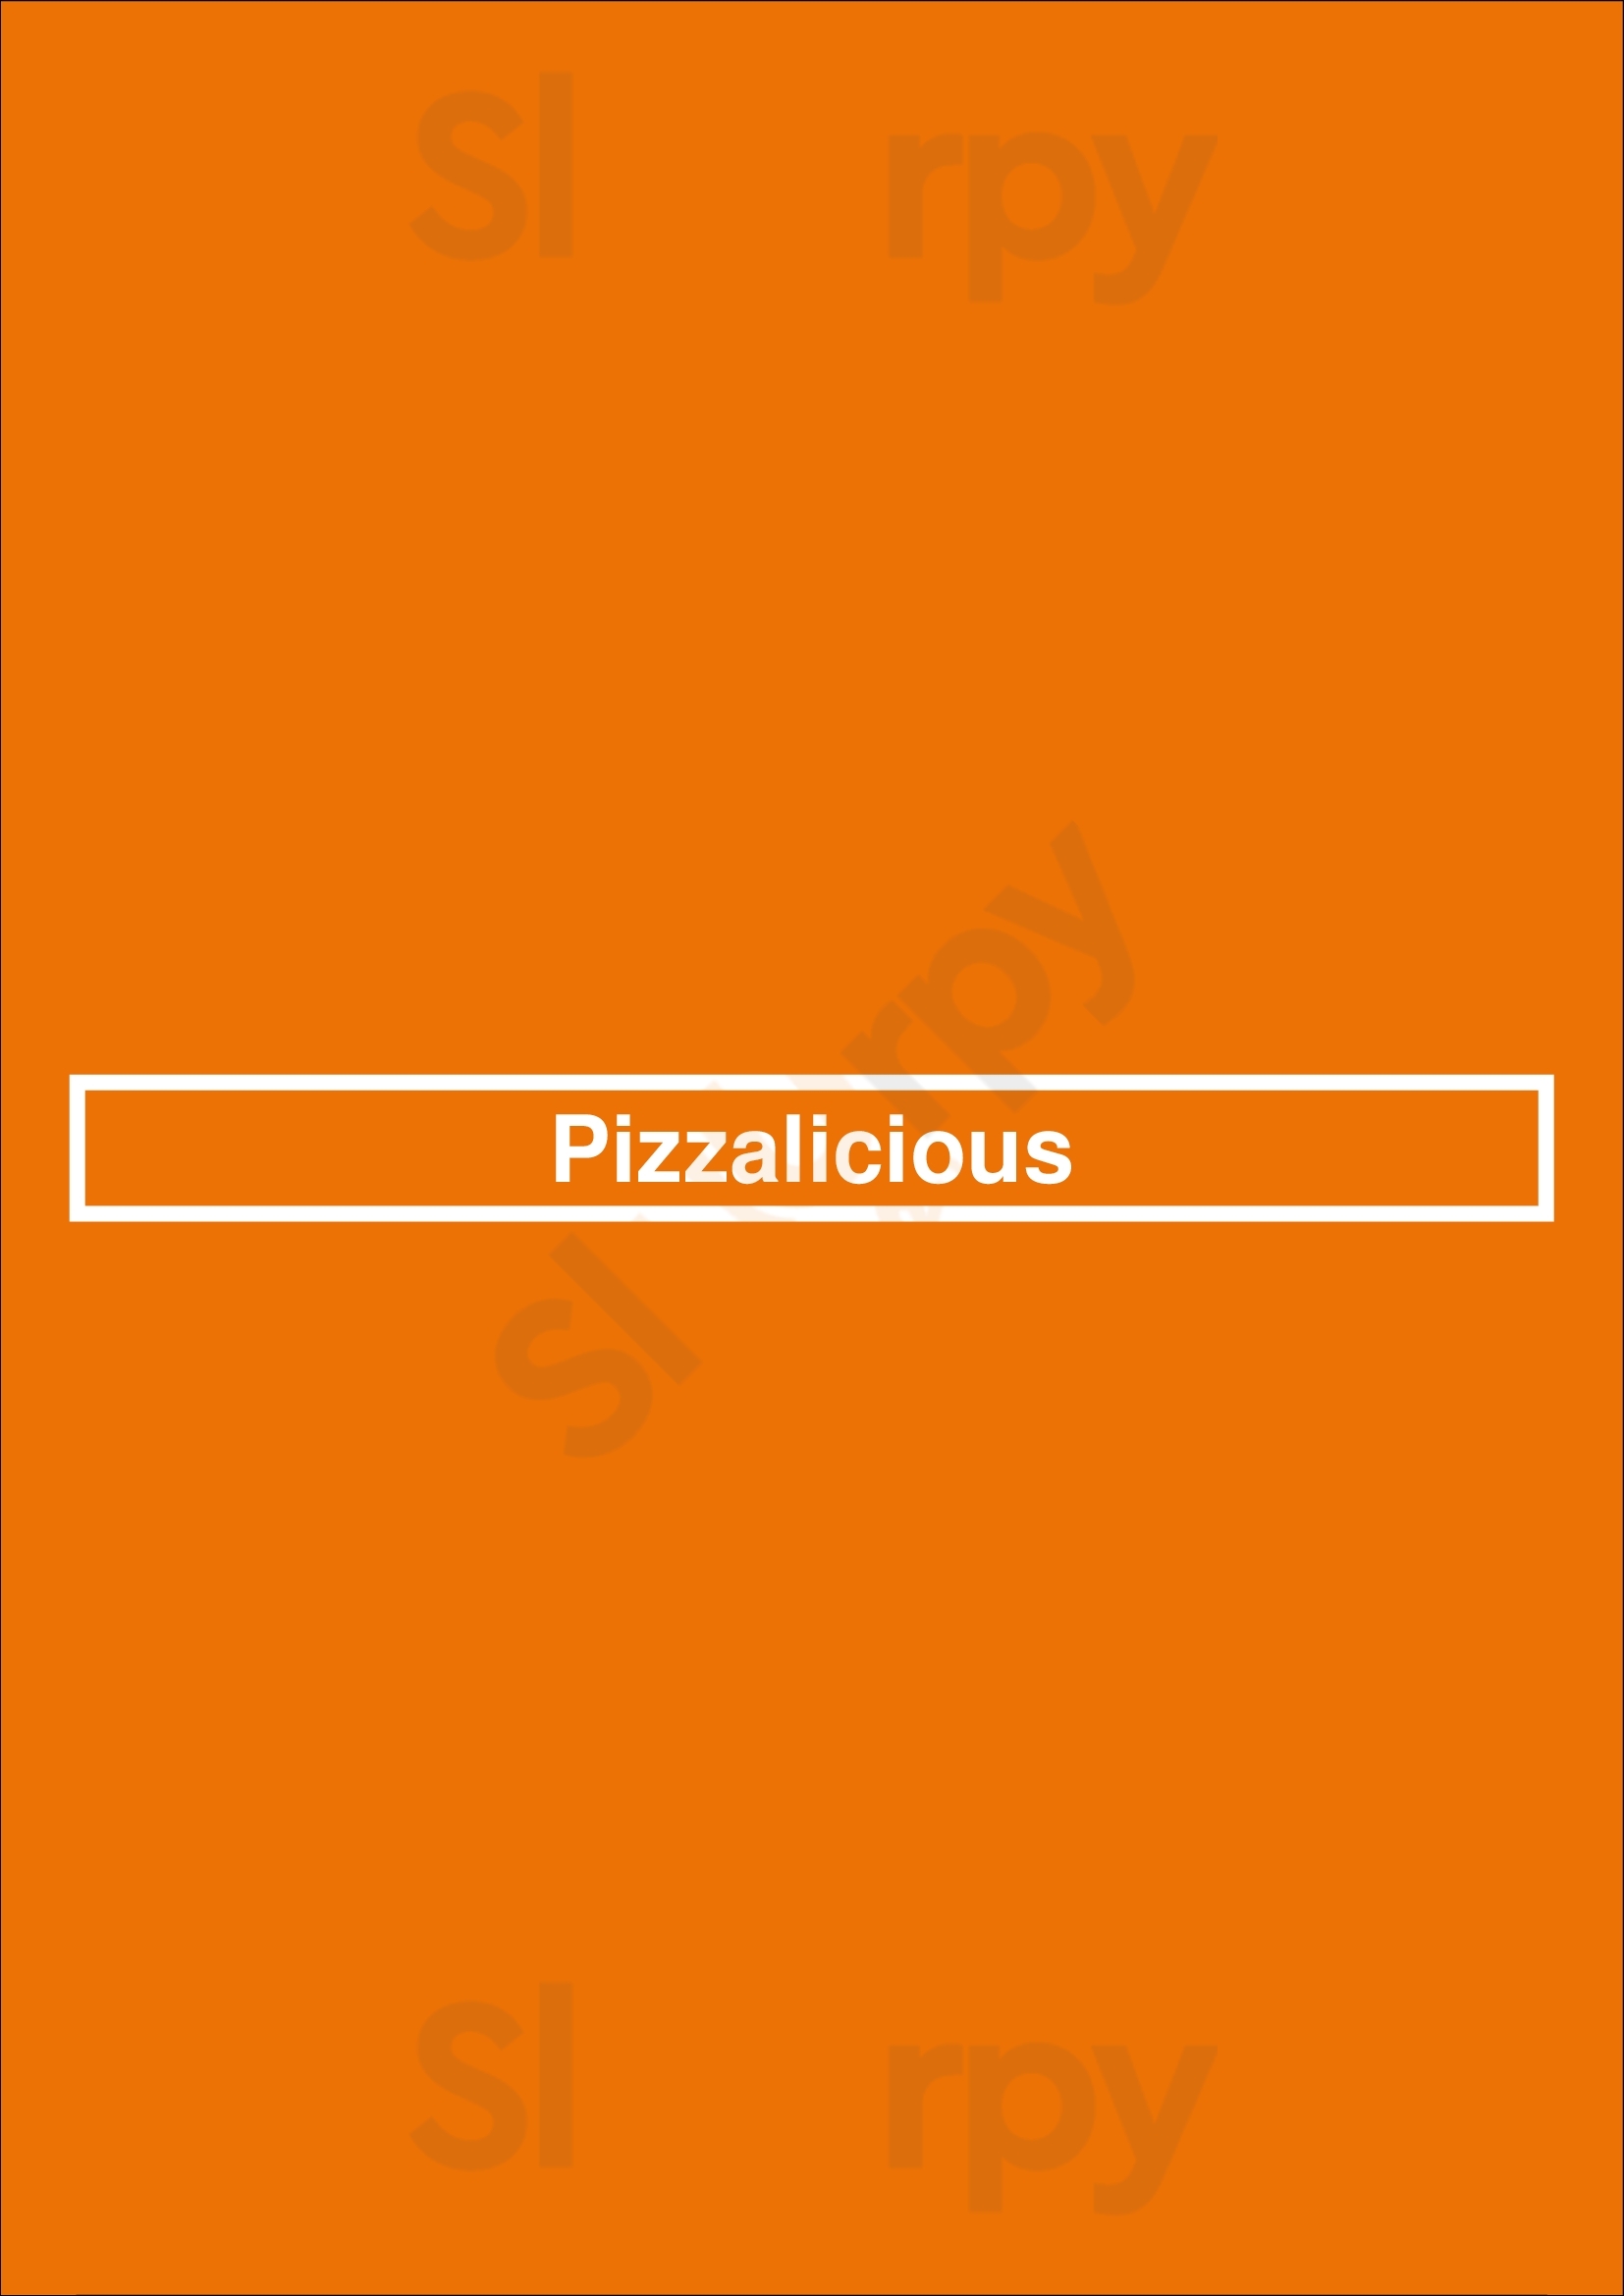 Pizzalicious Las Vegas Menu - 1